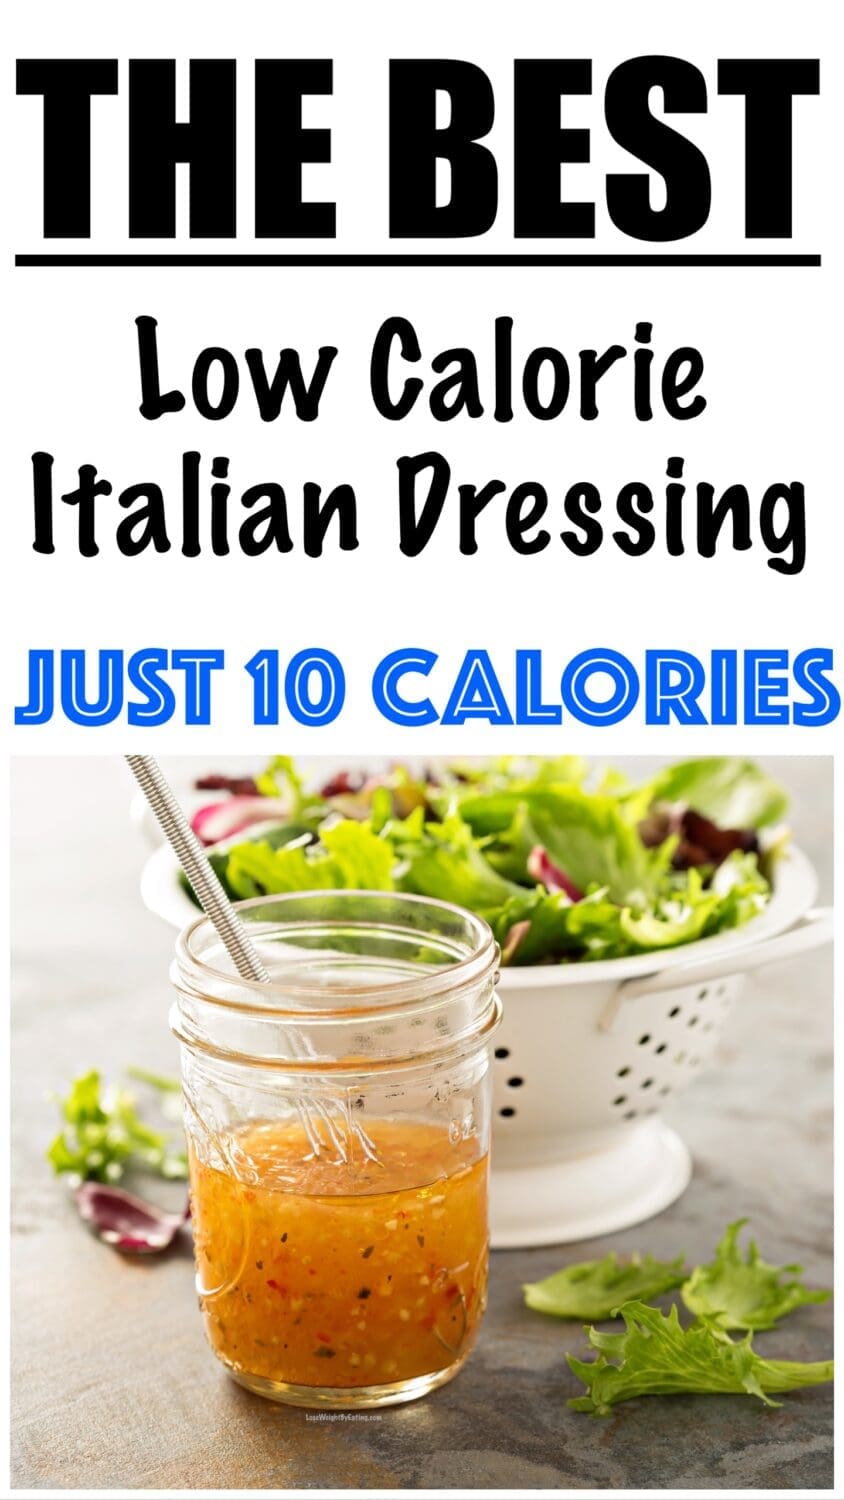 Low Calorie Italian Dressing